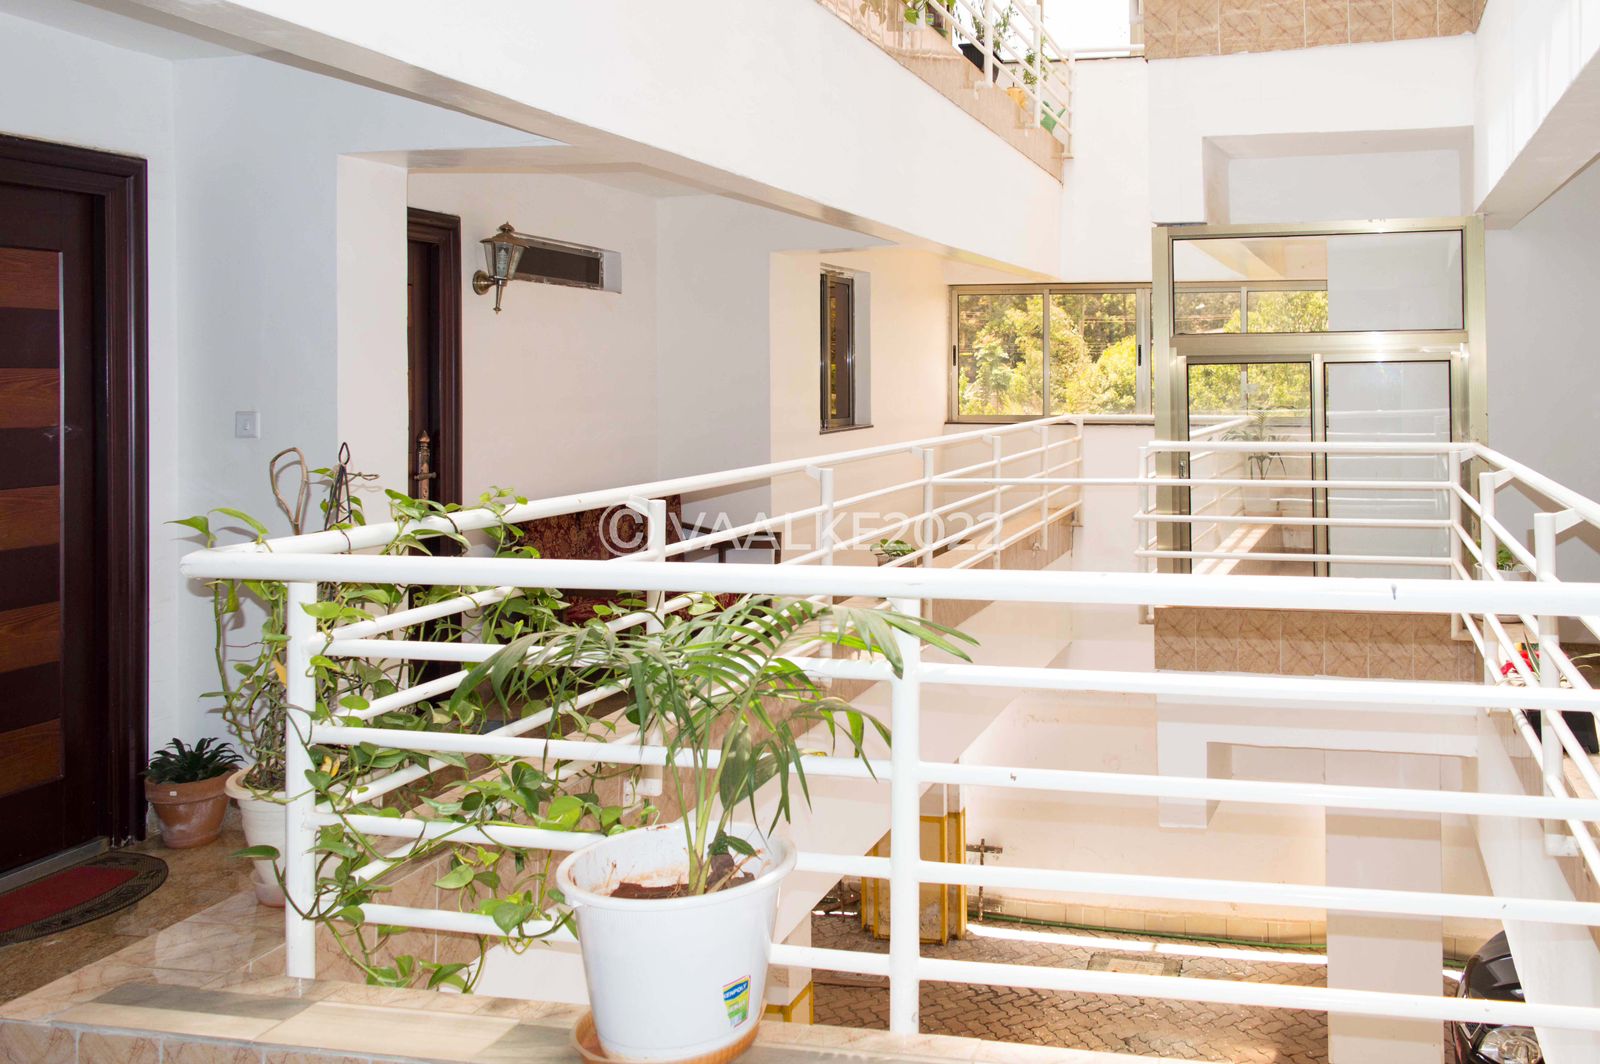 1 bedroom Apartments / Flats for Sale in Nyari